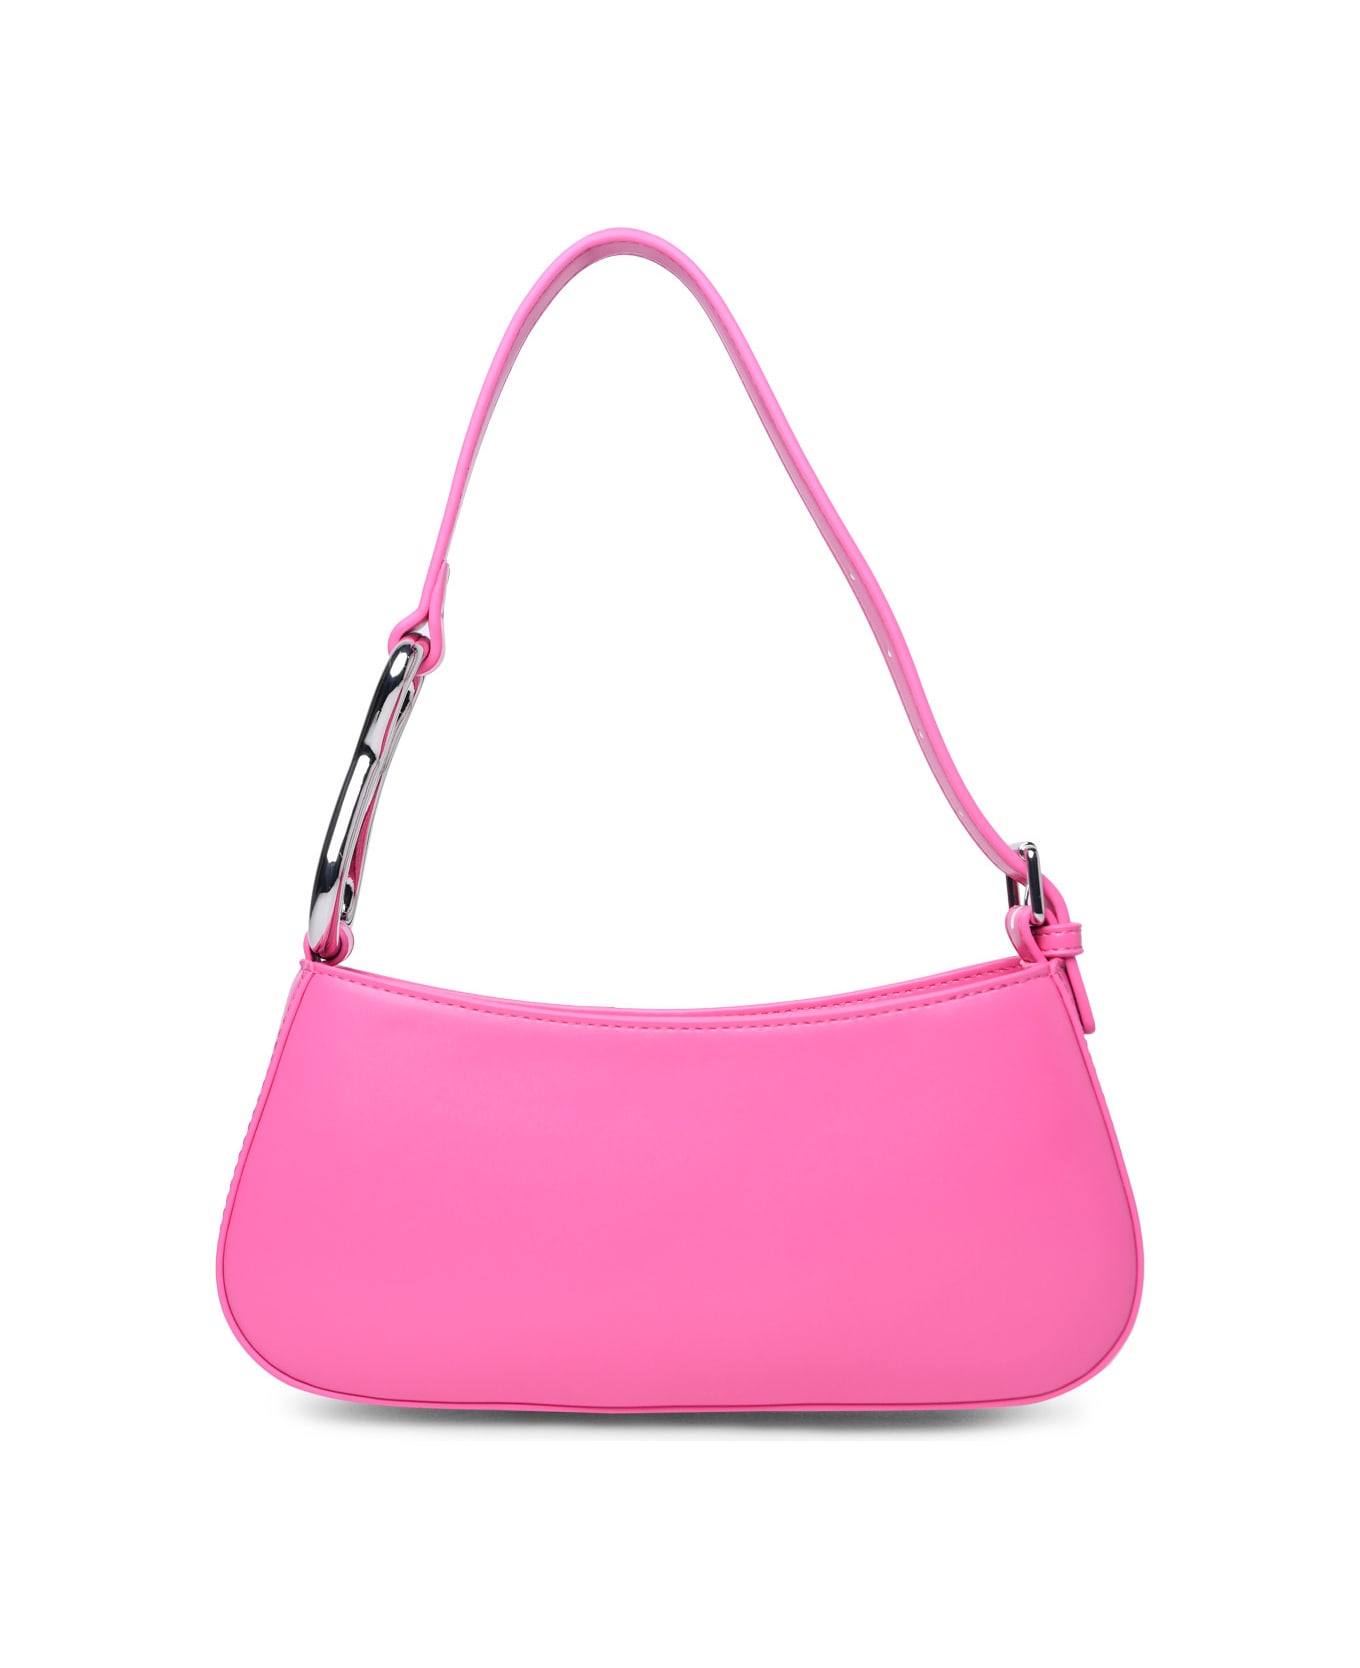 Chiara Ferragni 'cfloop' Pink Polyester Bag - Fuchsia